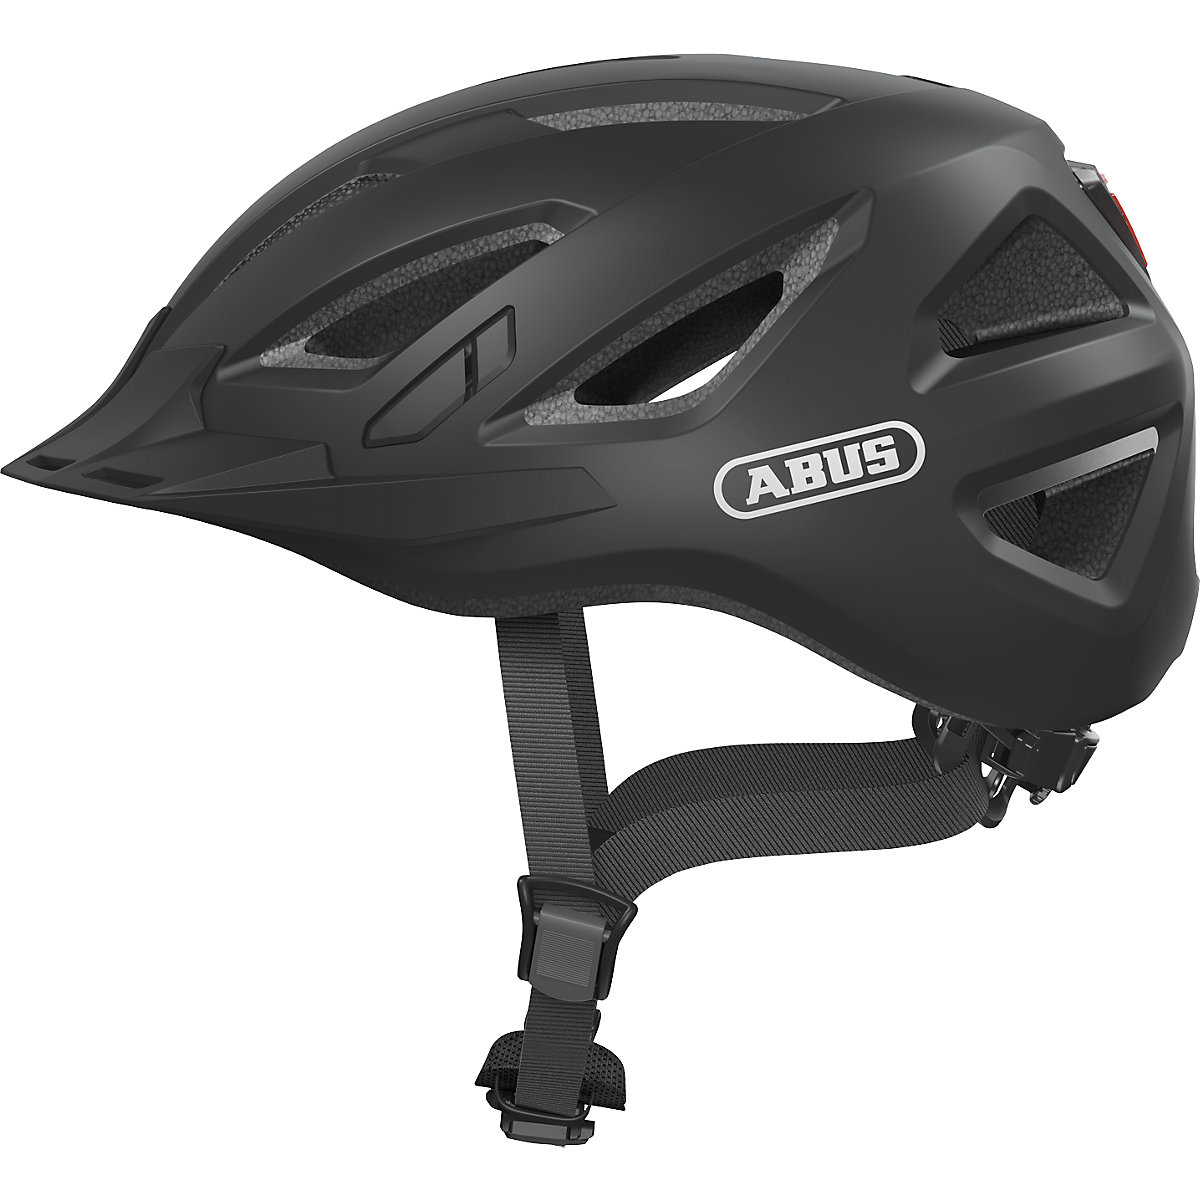 URBAN-I 3.0 bicycle helmet - ABUS